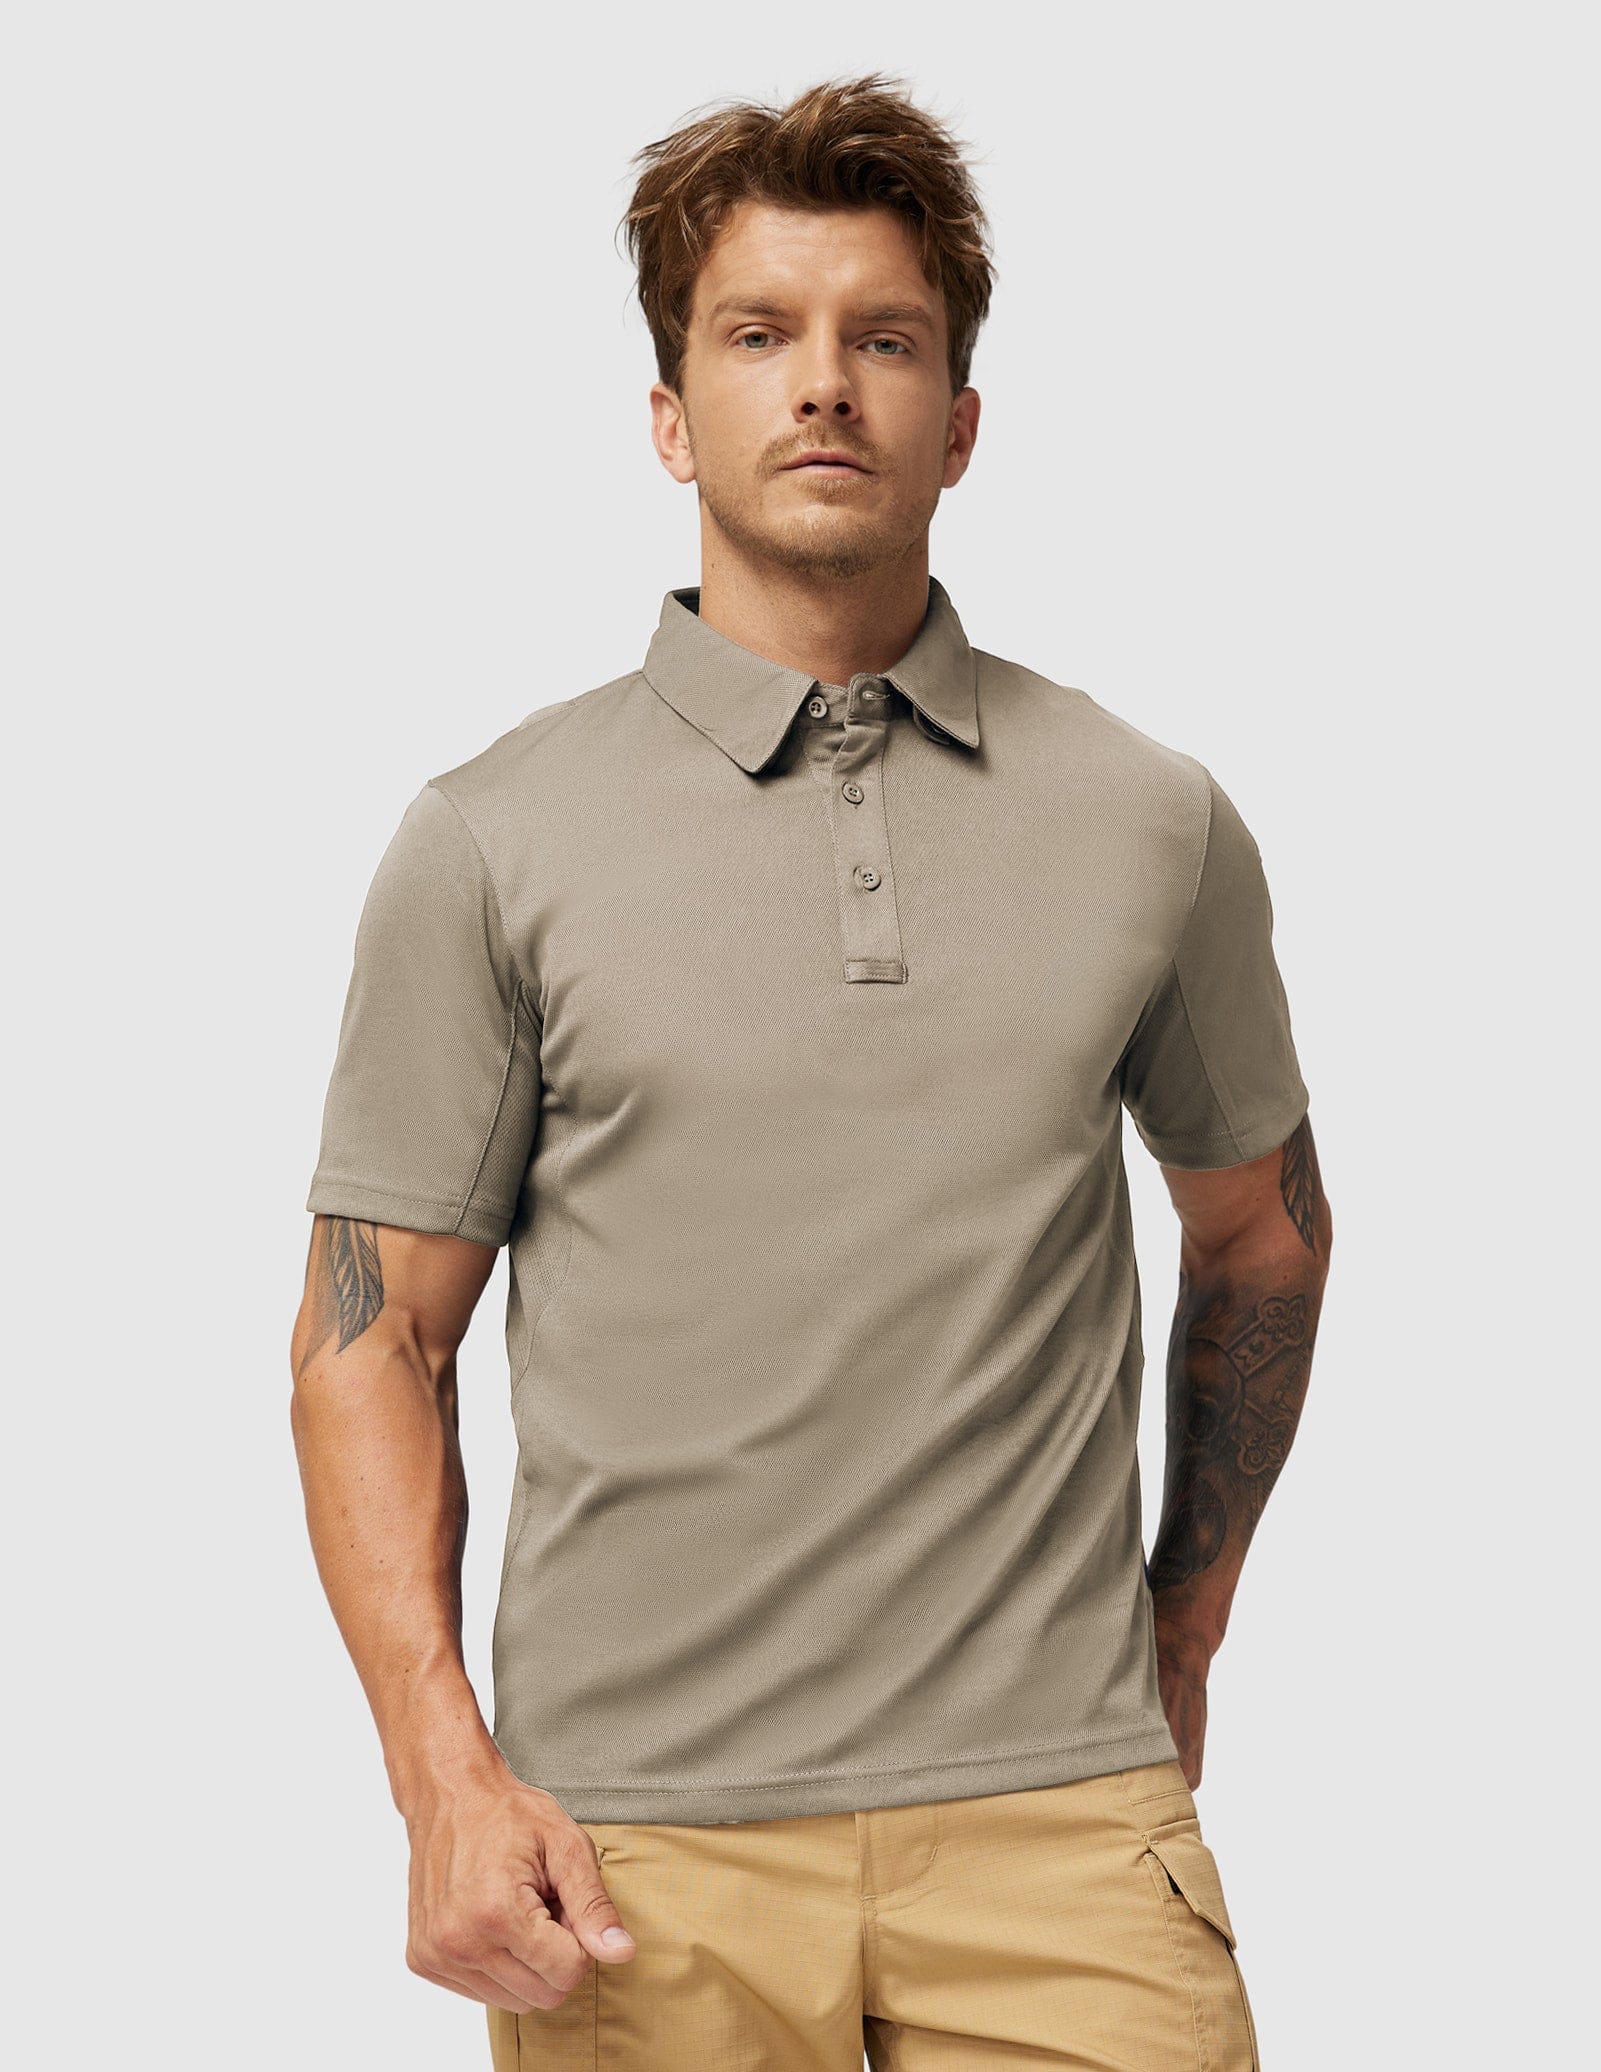 Men's Tactical Polo Shirts Outdoor Performance Collared Shirt, Khaki / 3XL